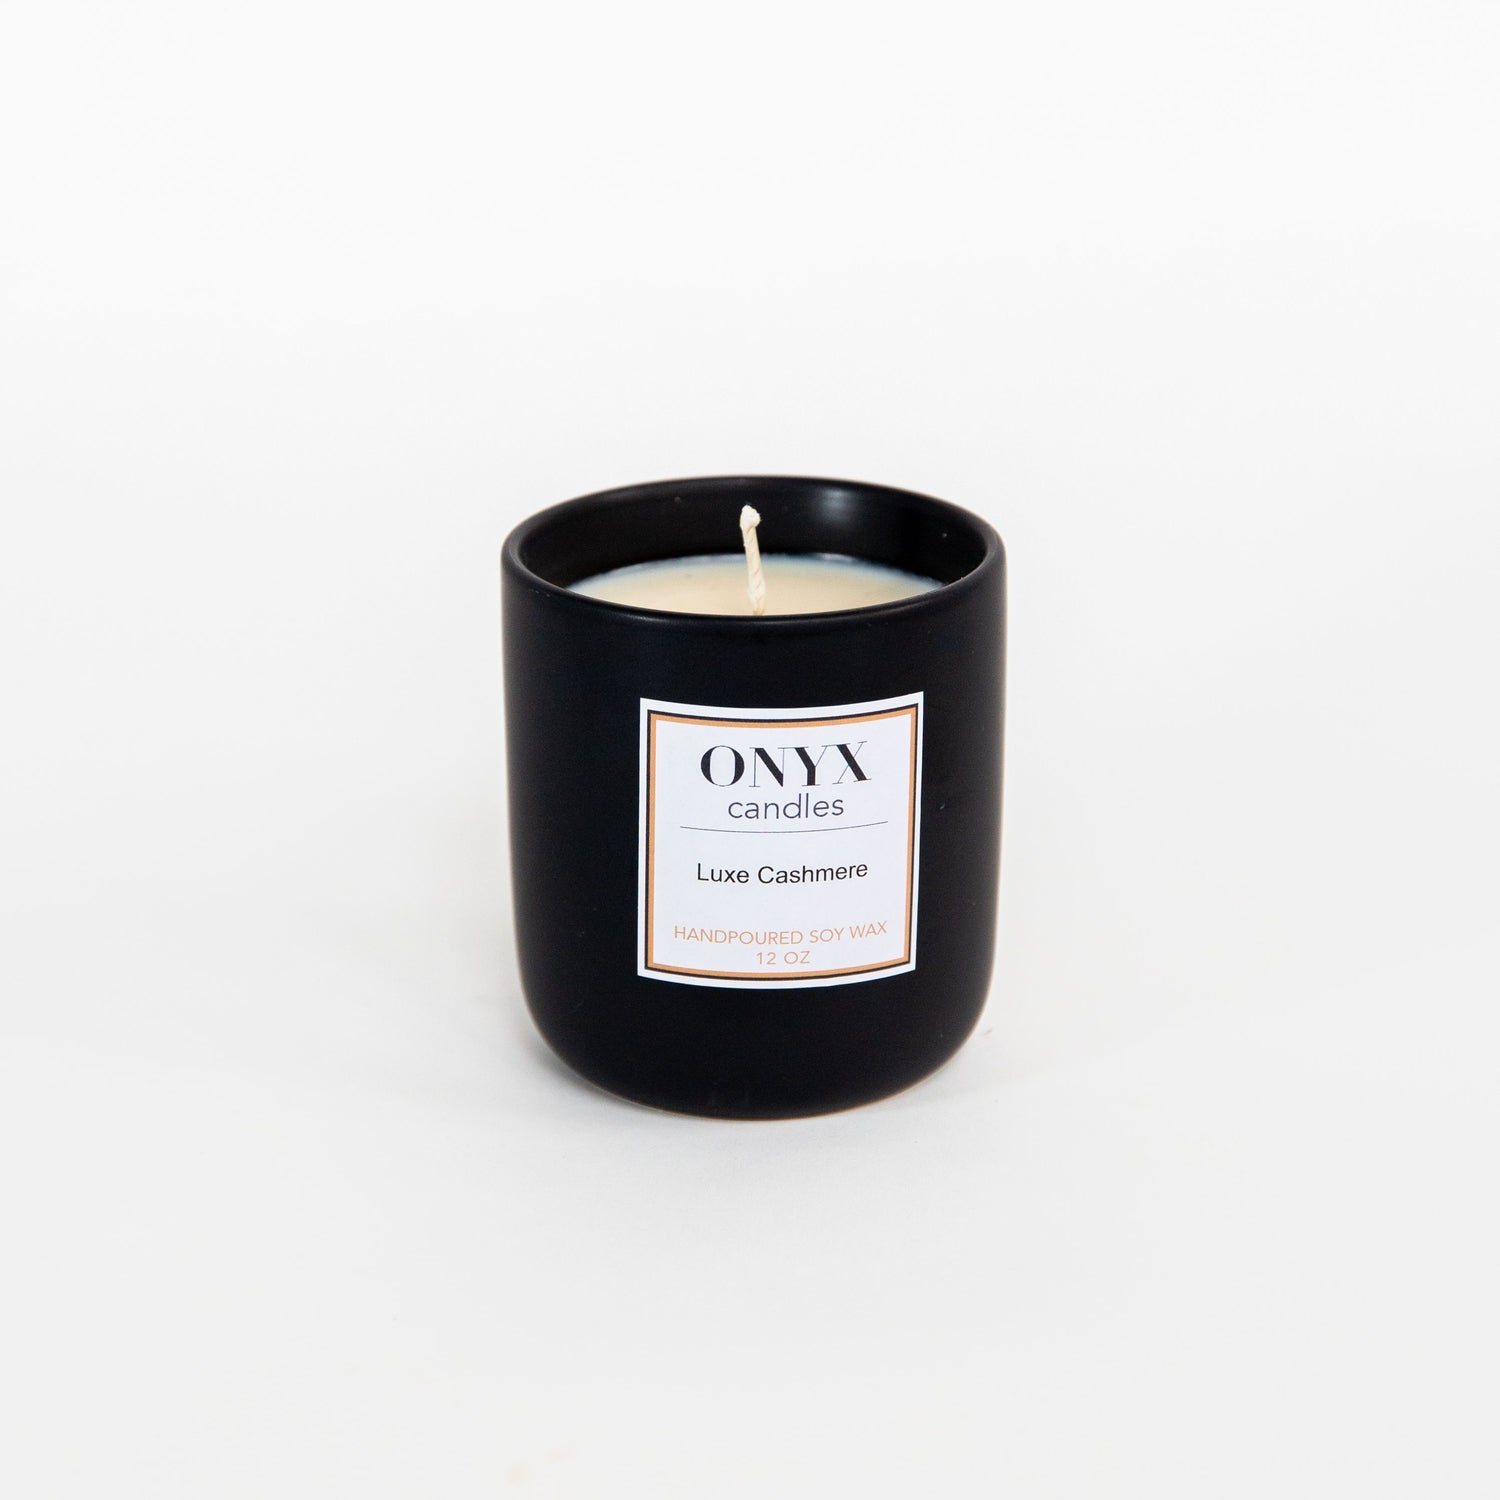 12 oz matte black ceramic jar, candle scented in Luxe Cashmere